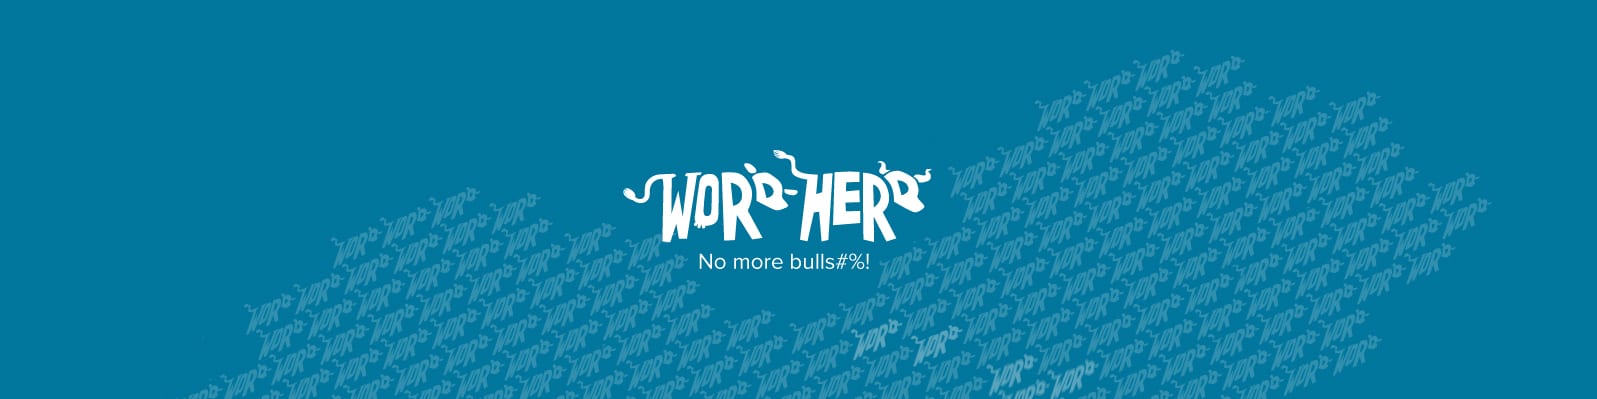 WordHerd - no more bulls#%!